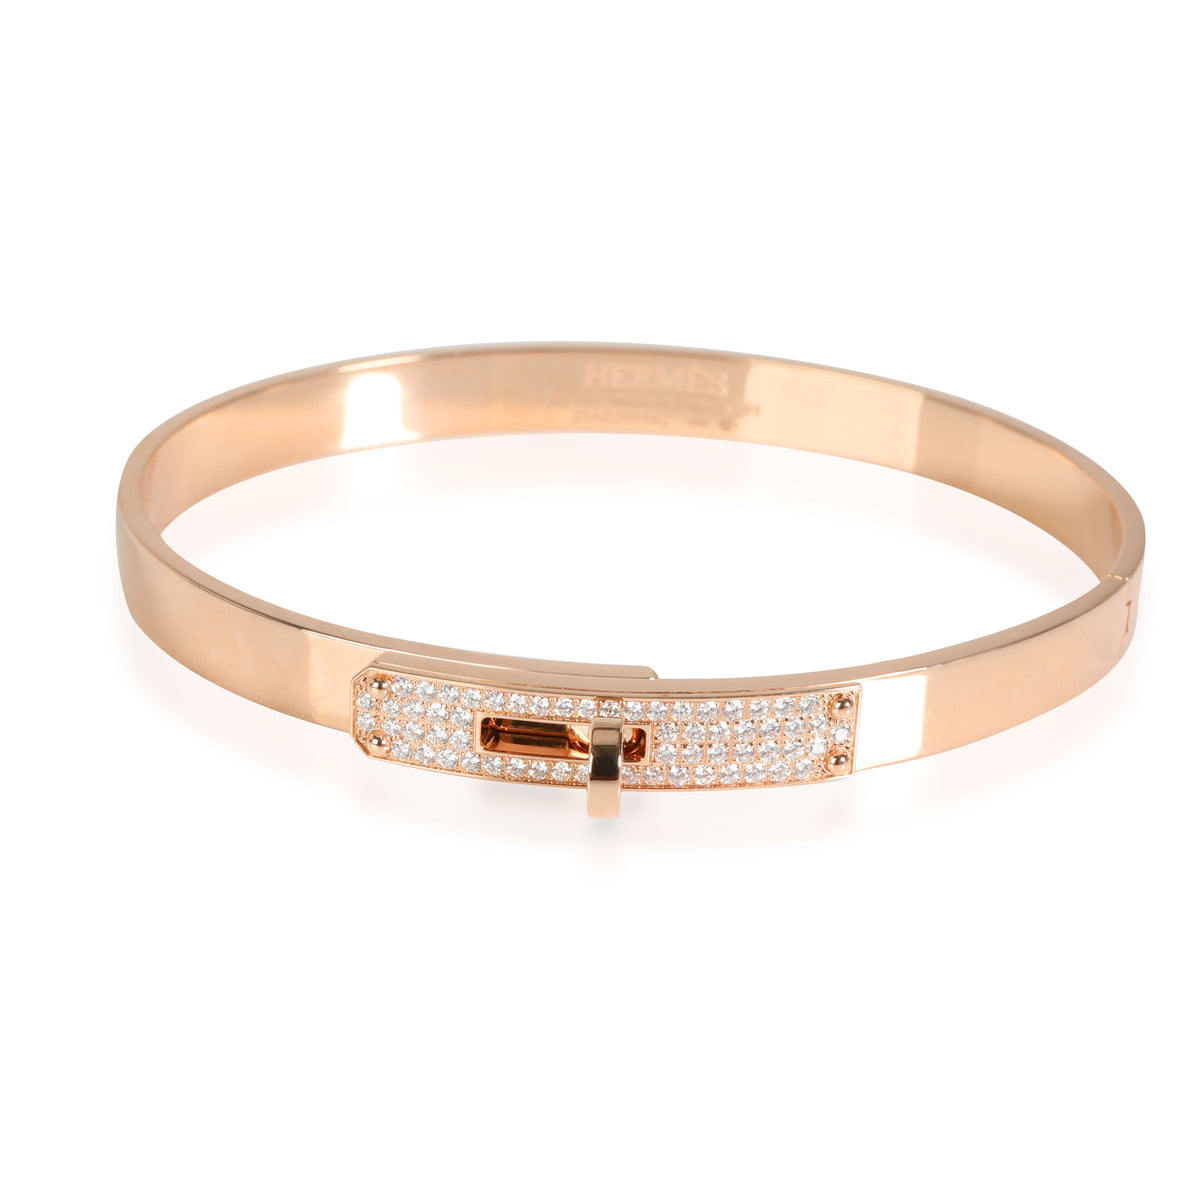 Hermes Kelly Bracelet 18k Rose Gold with Diamonds